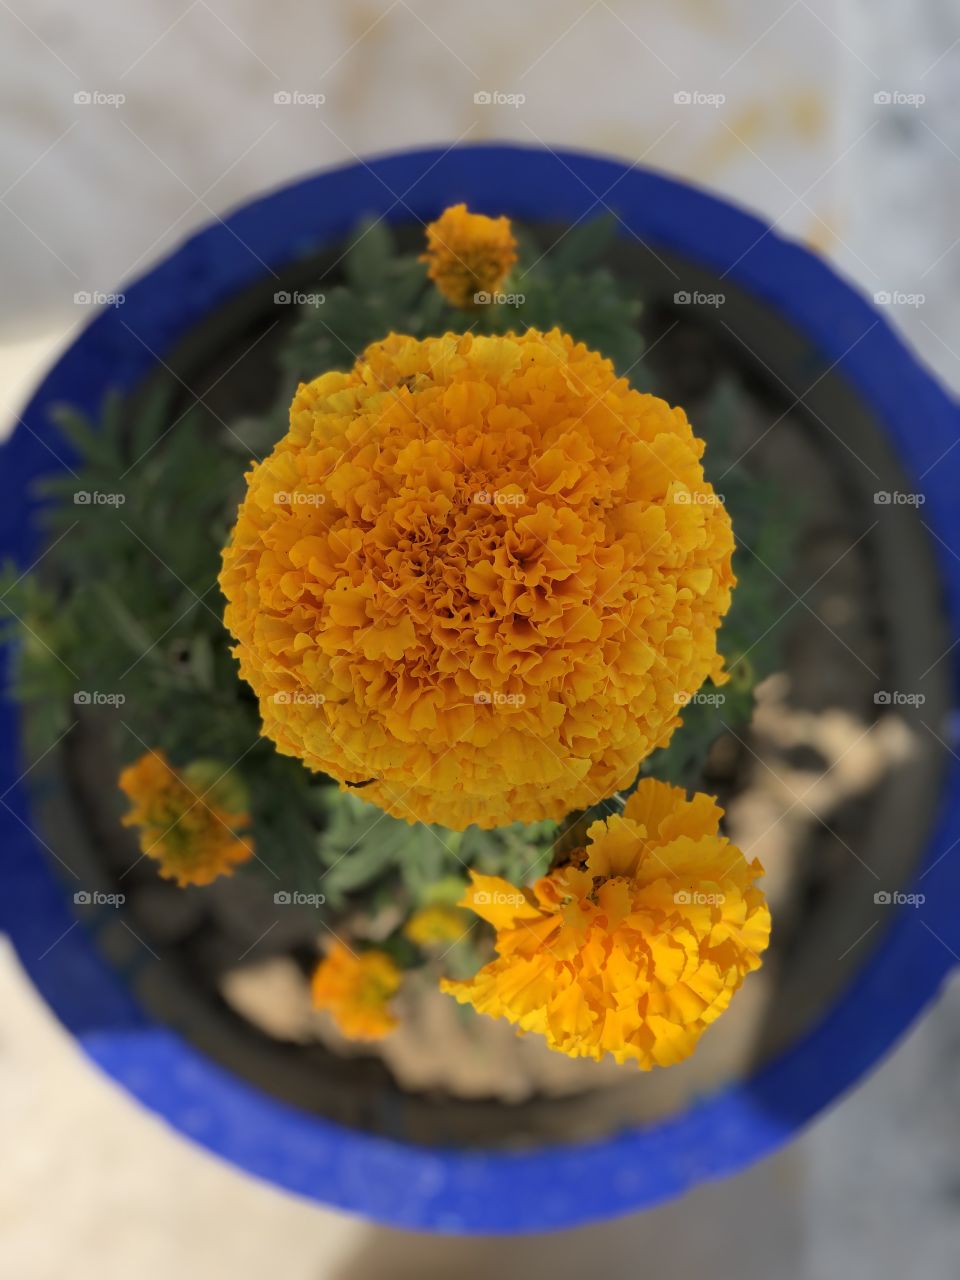 Marigold grown in a pot